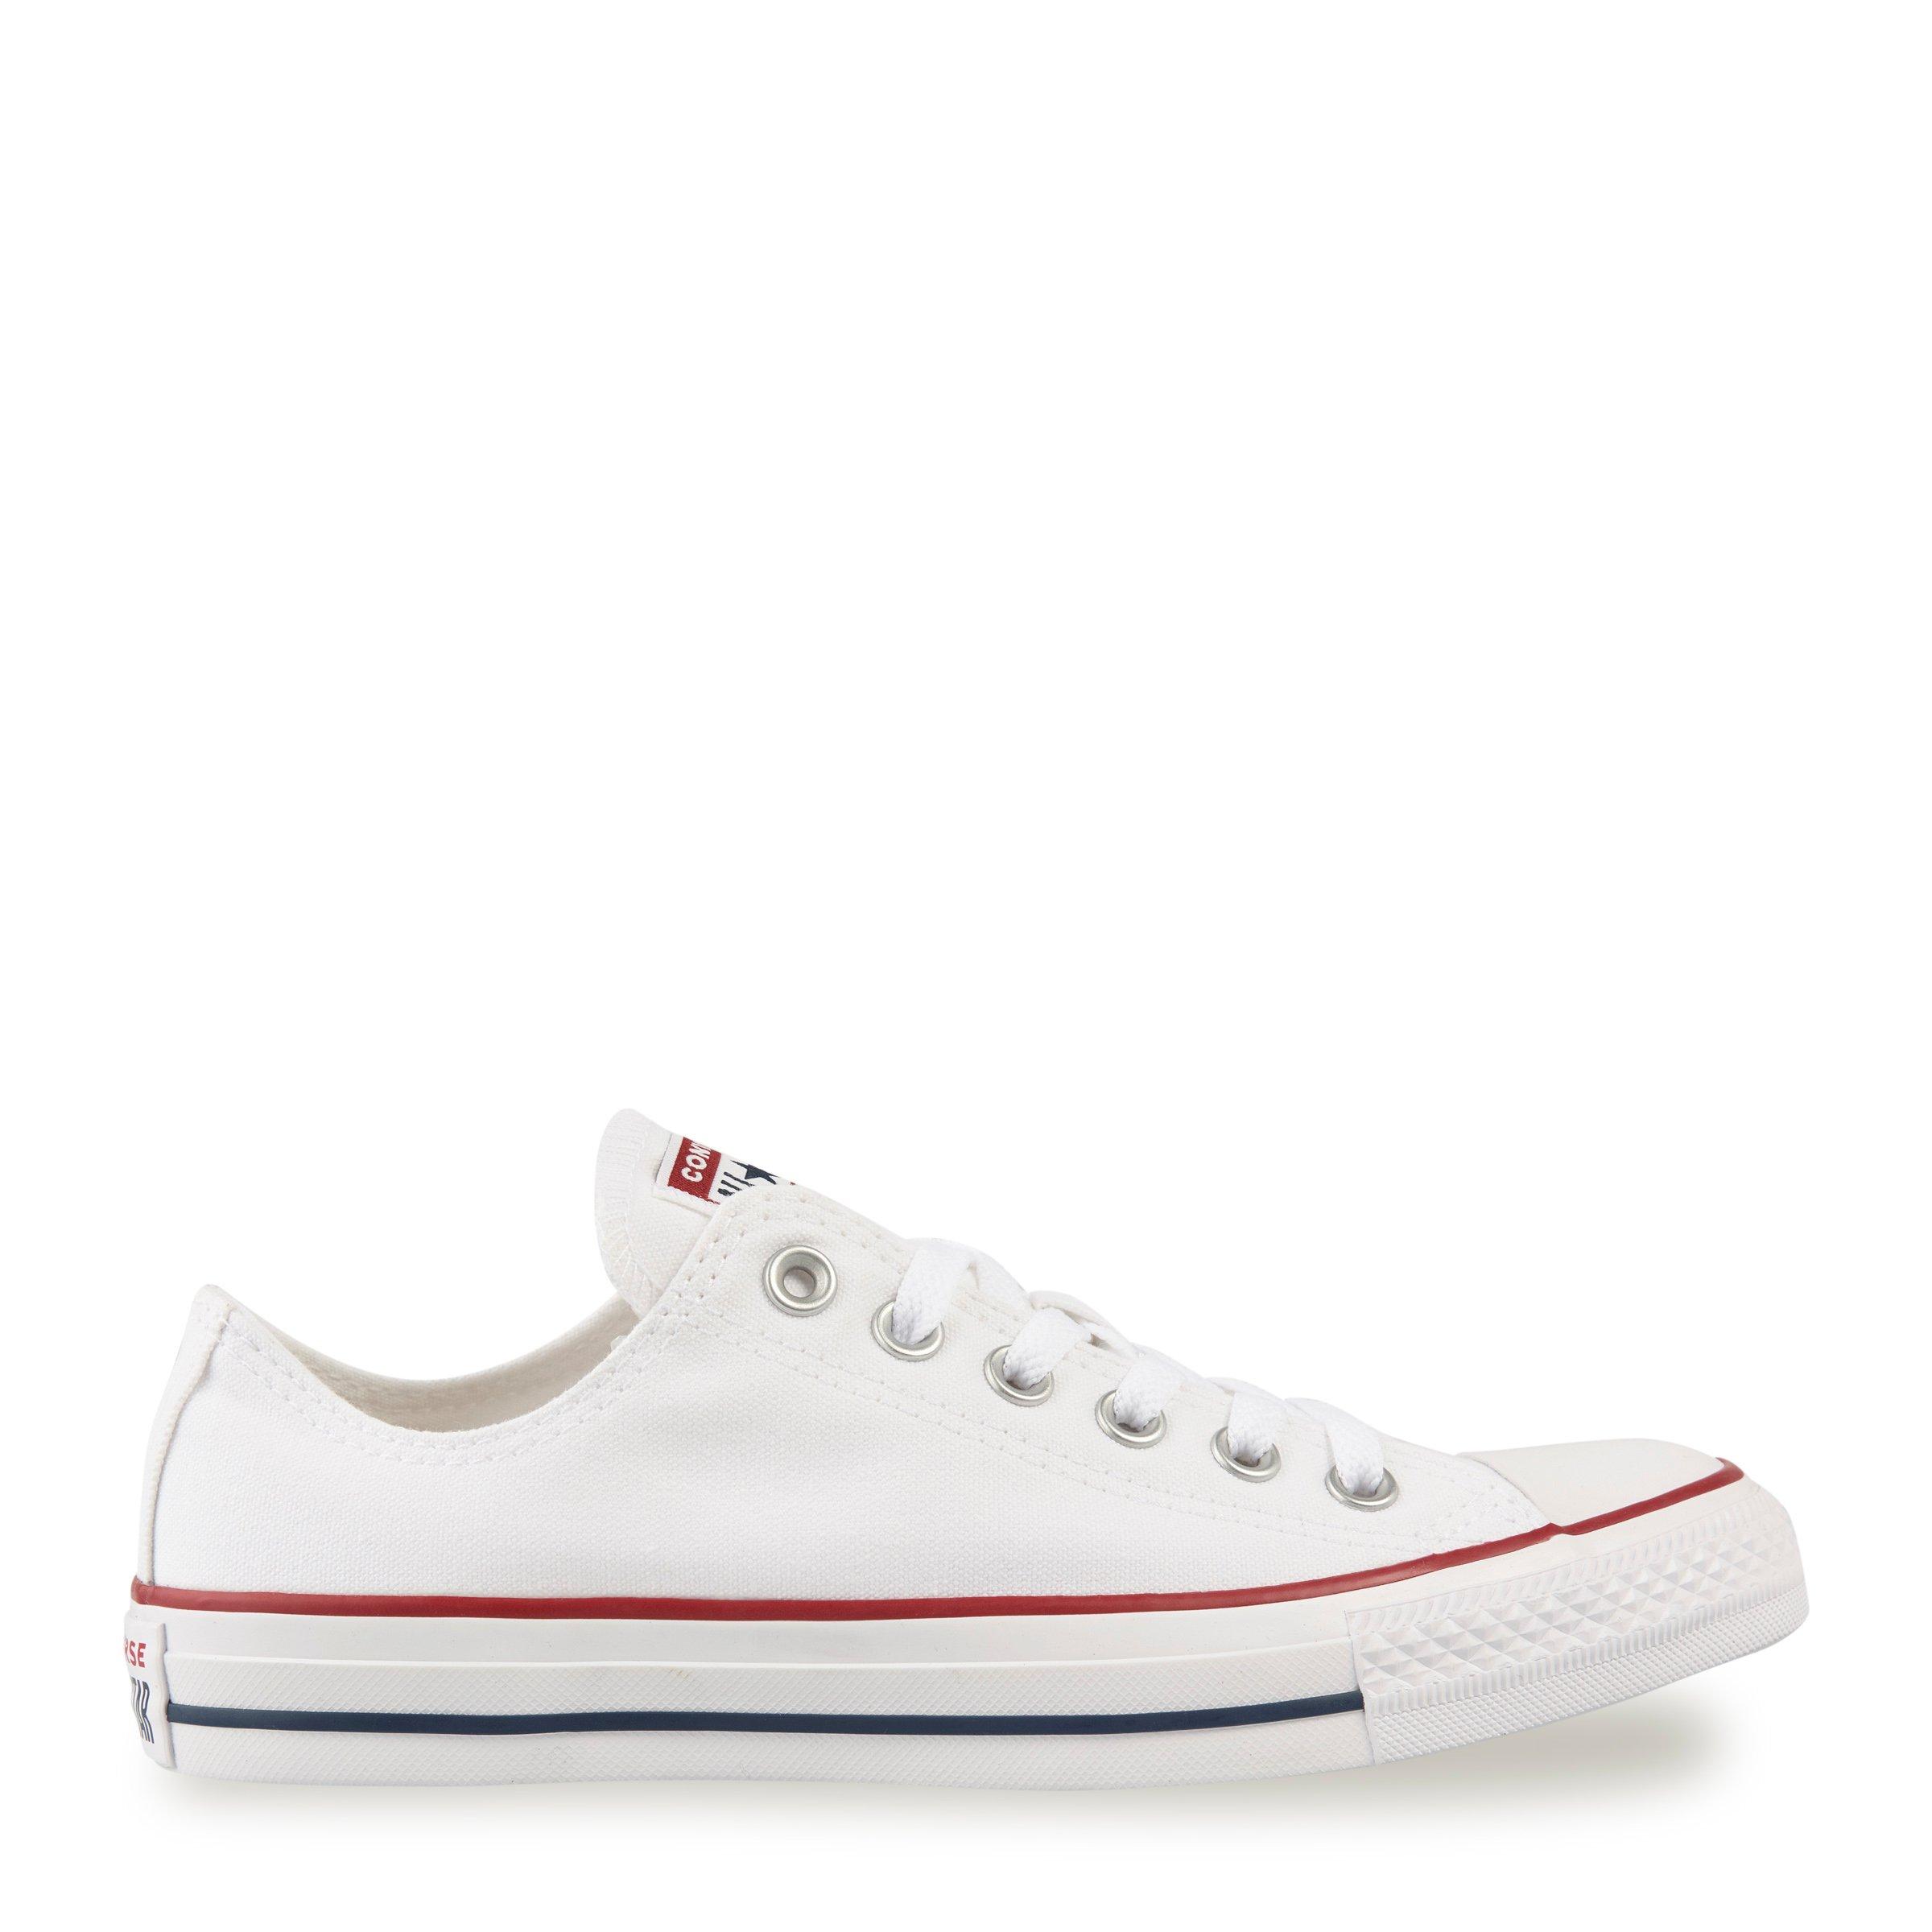 Buy Converse All Star Low Sneakers Online | Office London